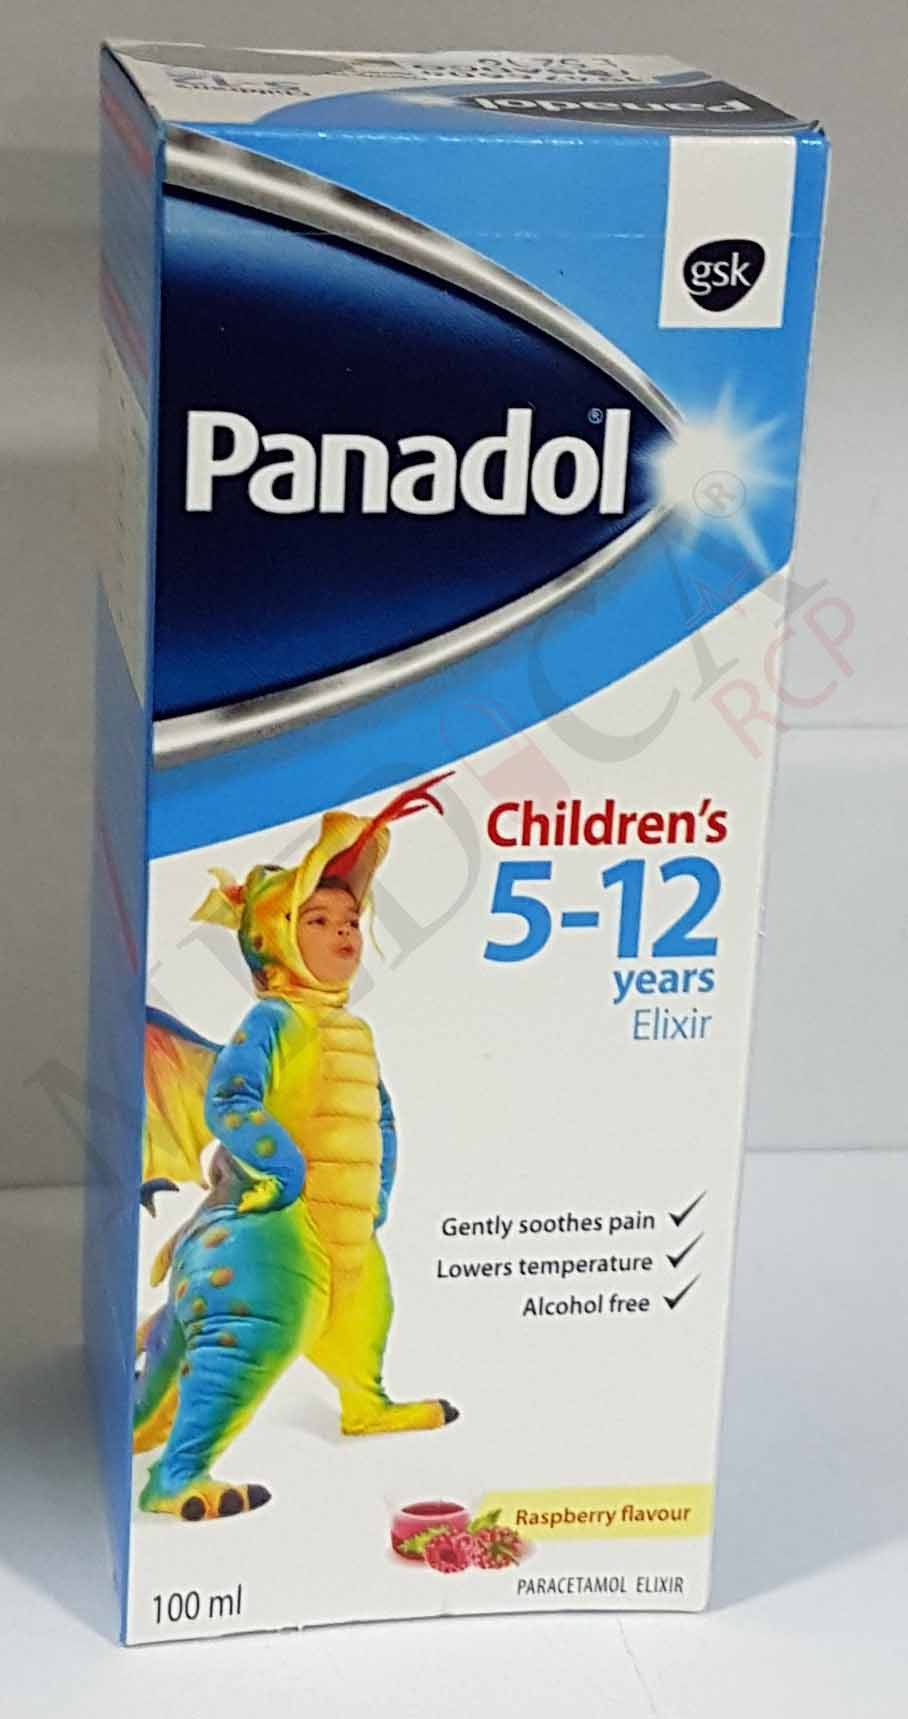 Children's Panadol 5-12 years